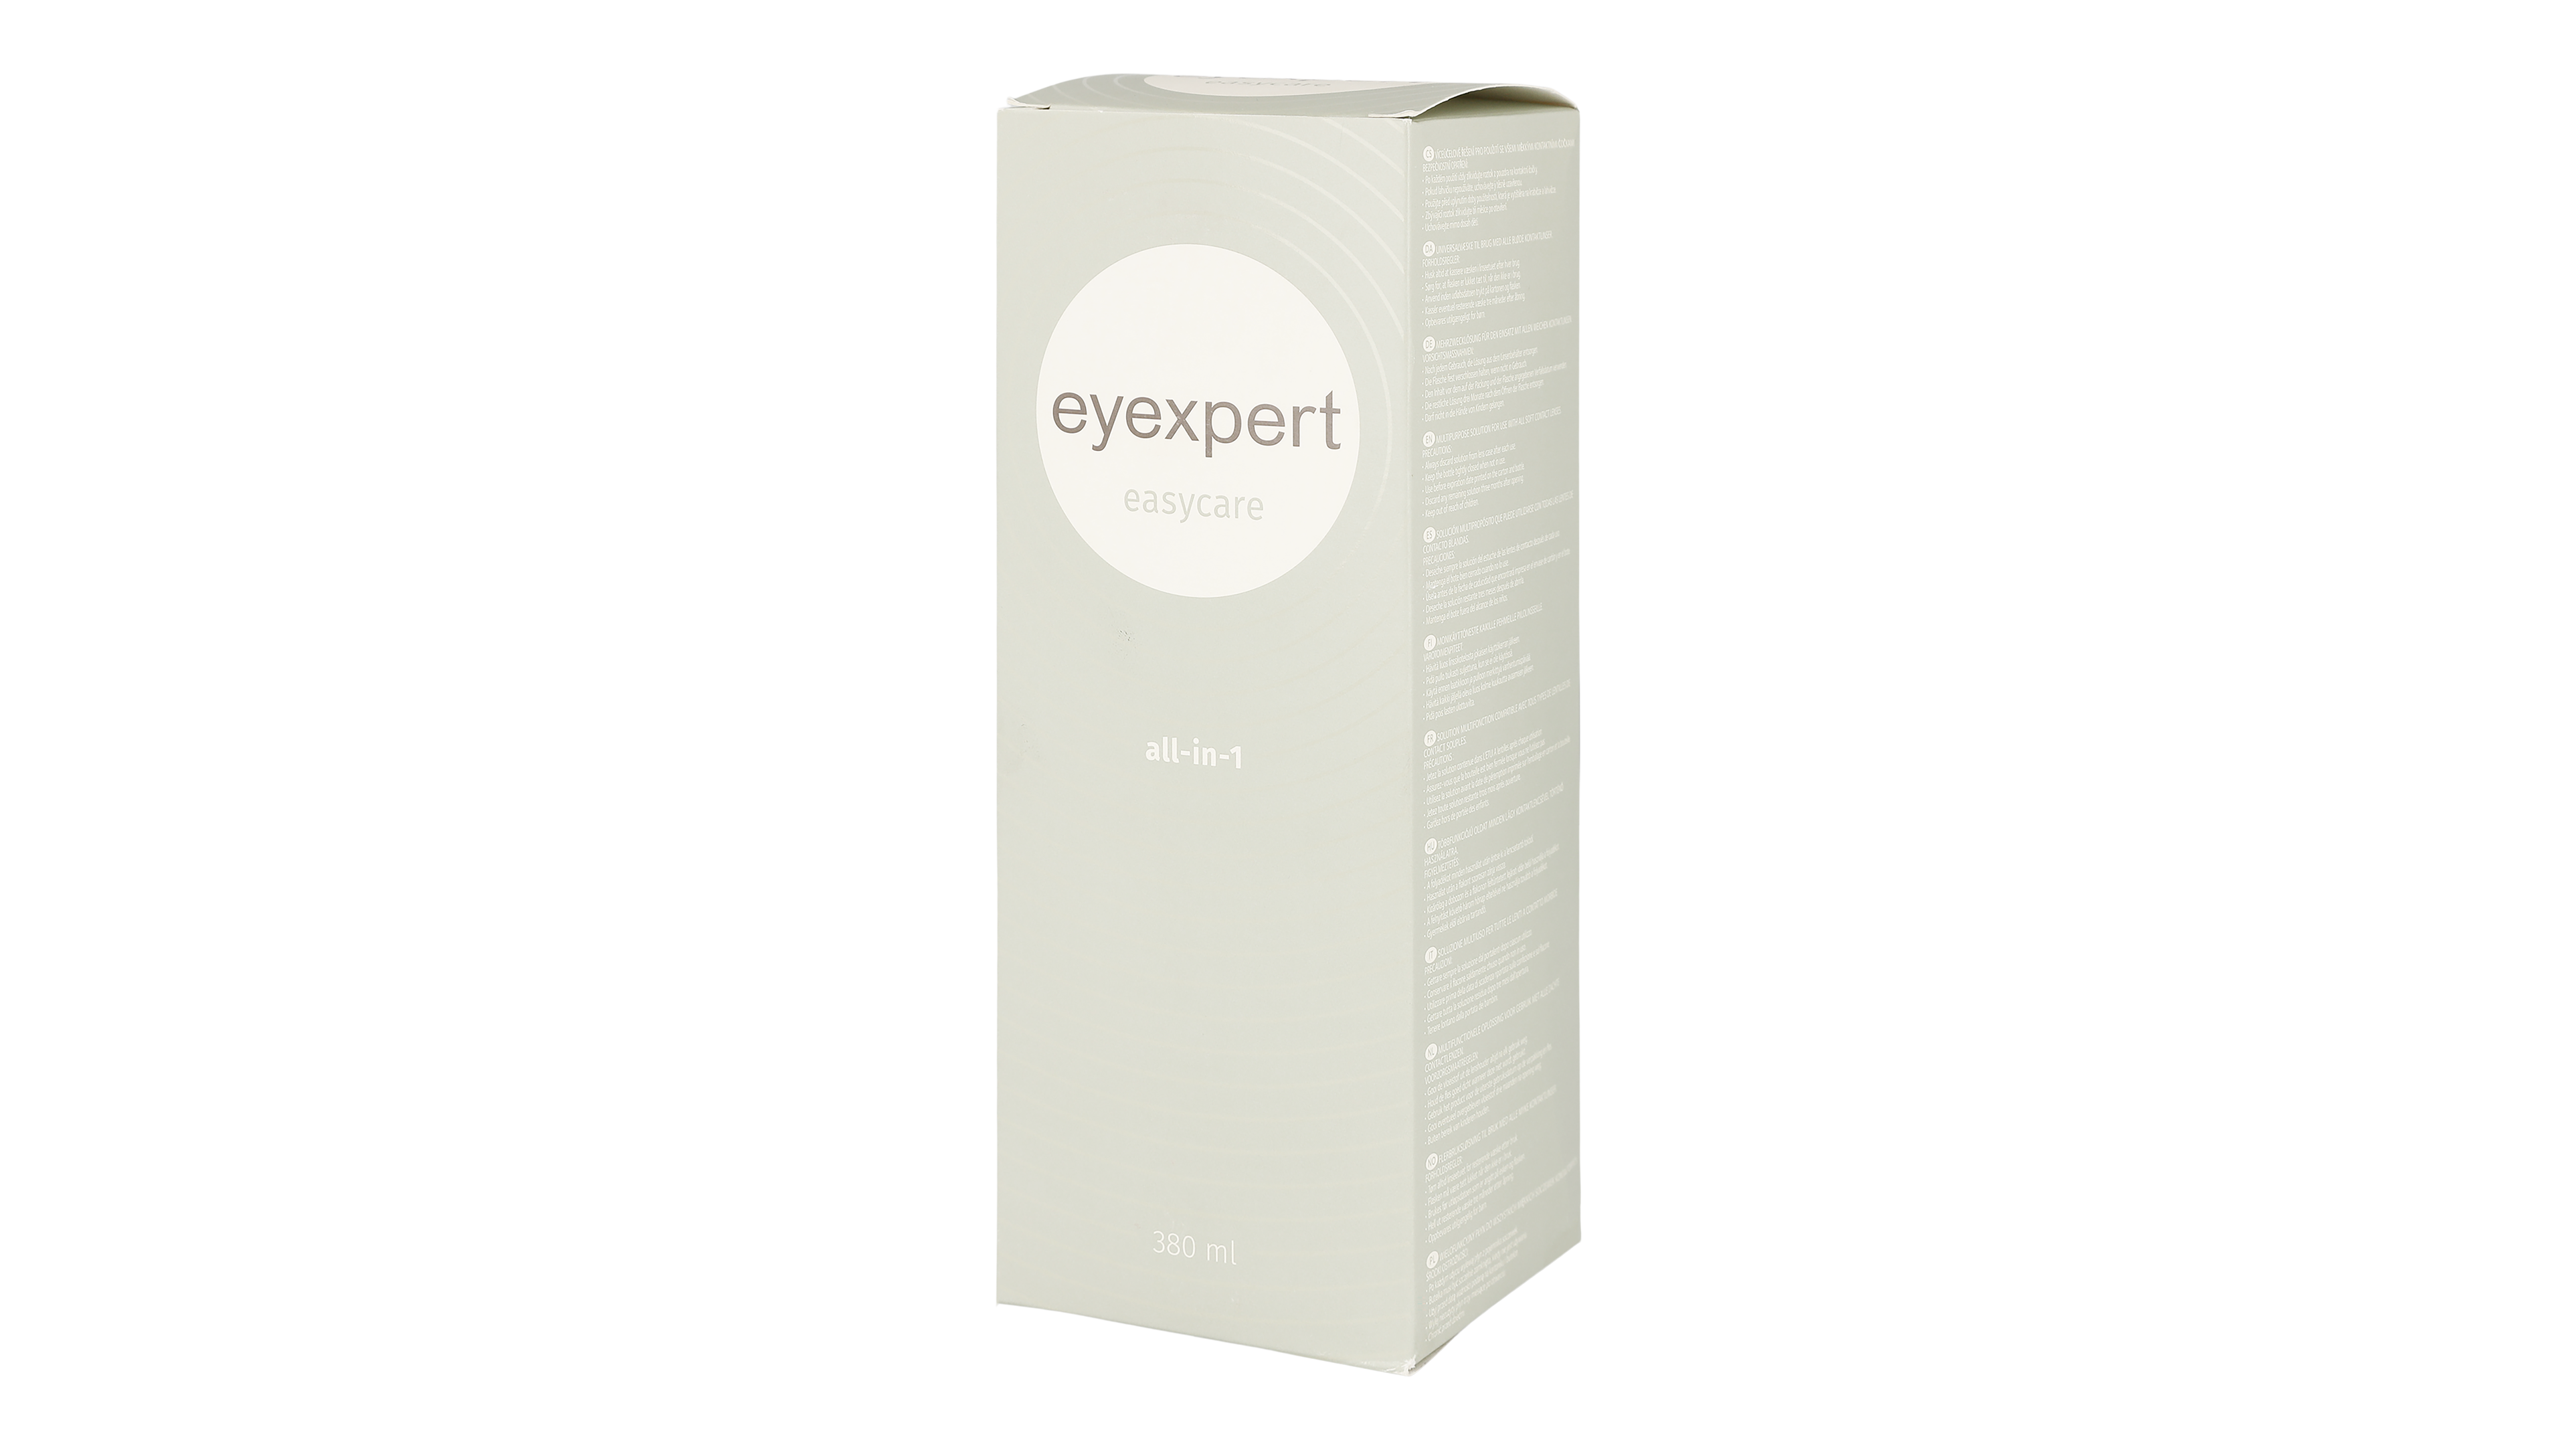 Angle_Left01 EYEXPERT Eyexpert Easycare 360ml Solution FLACON SIMPLE (250 À 360ML)